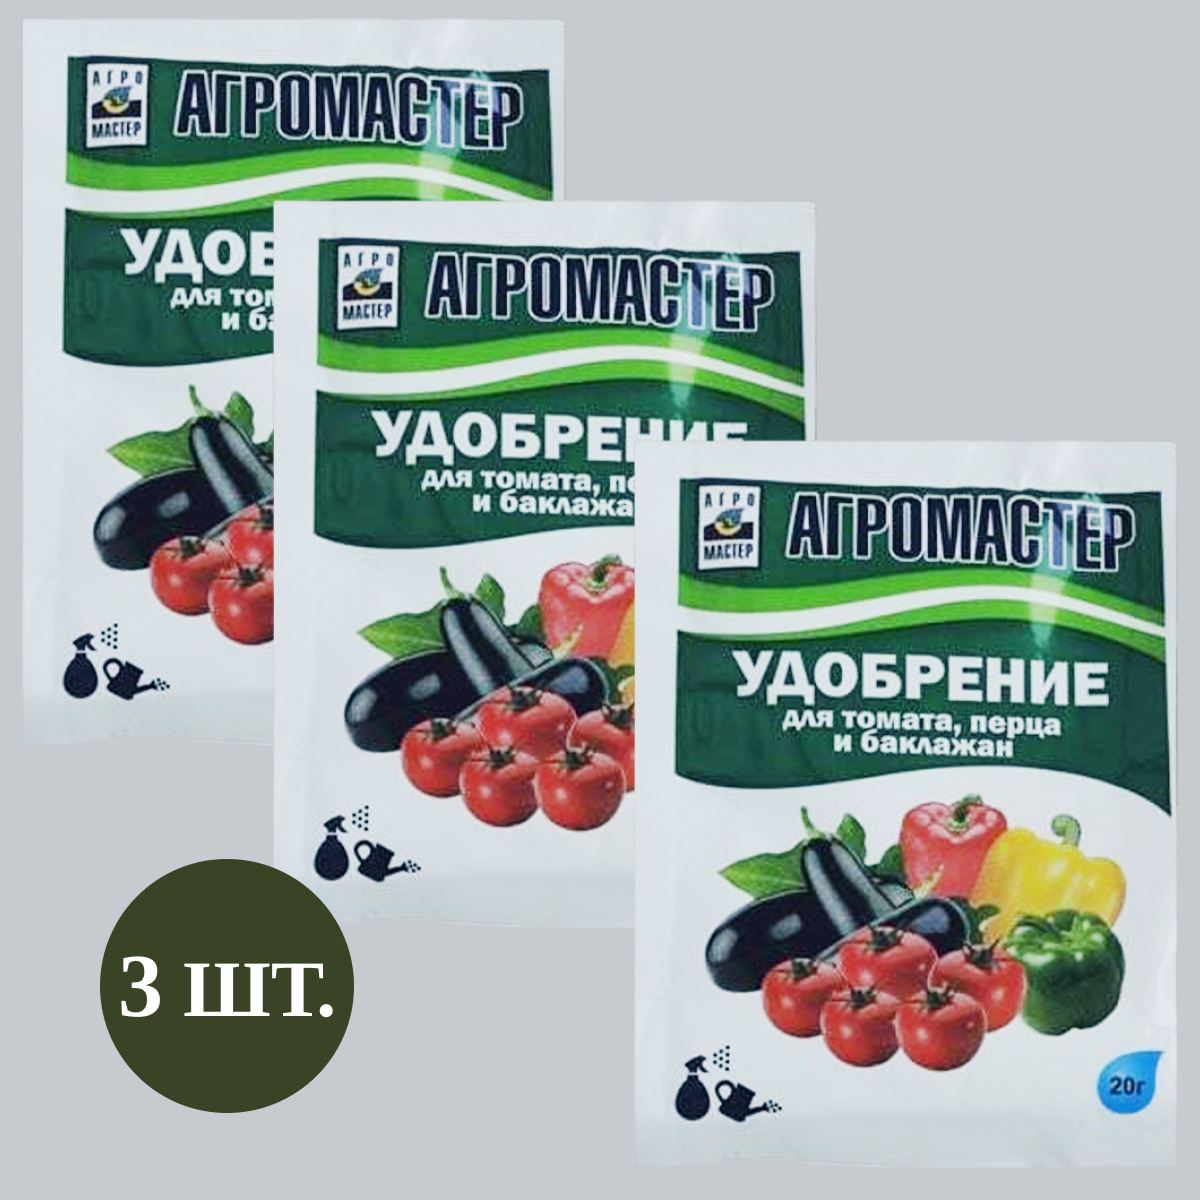 АгроМастер 10-18-32 для томата, перца и баклажан 0,02, 3 шт - фотография № 2